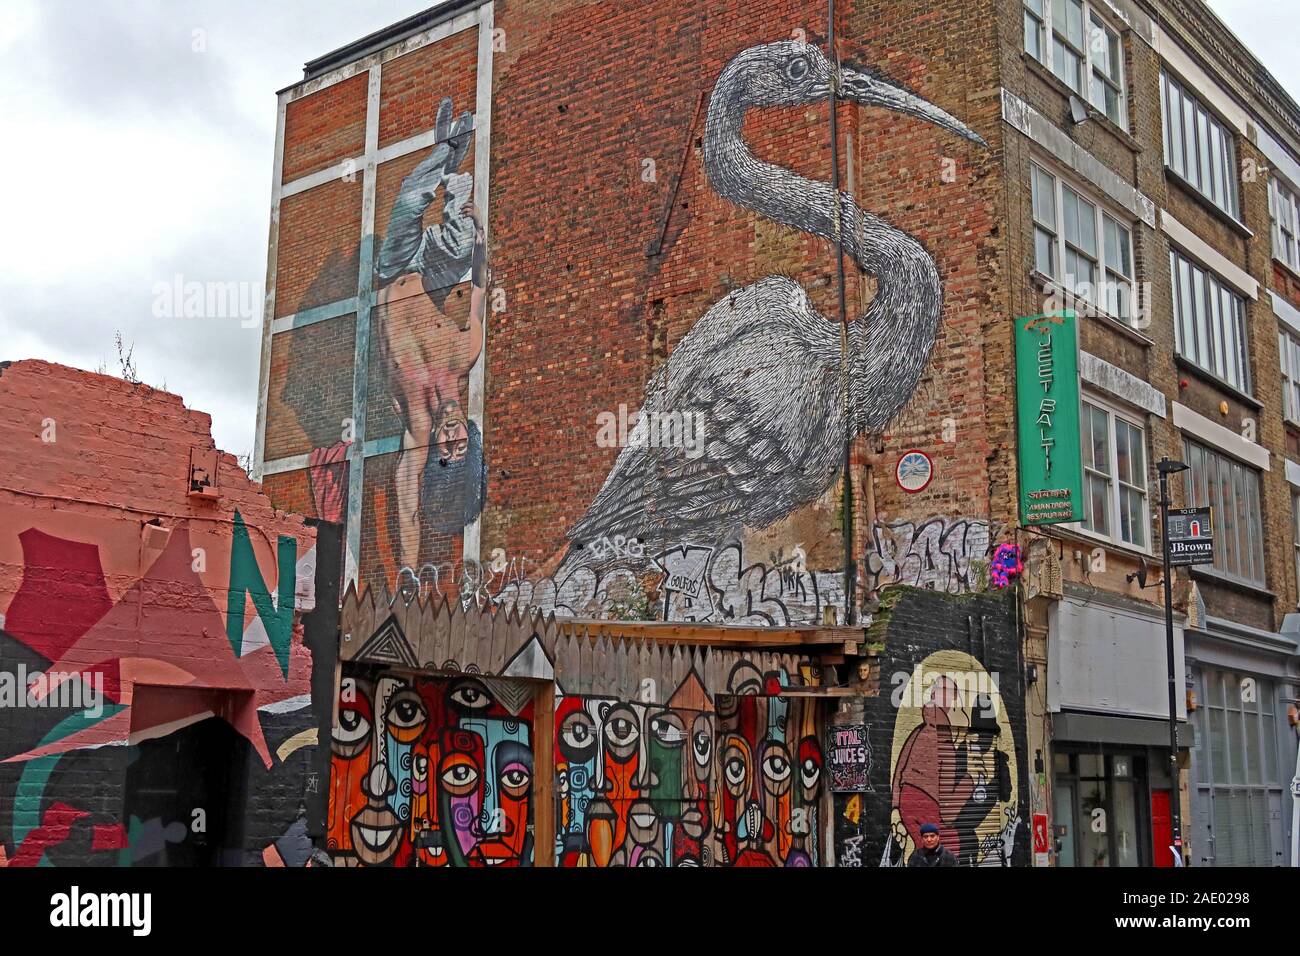 Stork,Hanbury Street,Brick Lane,art and graffiti,Shoreditch,Tower Hamlets,East End,London,South East,England,UK, E1 6QL Stock Photo